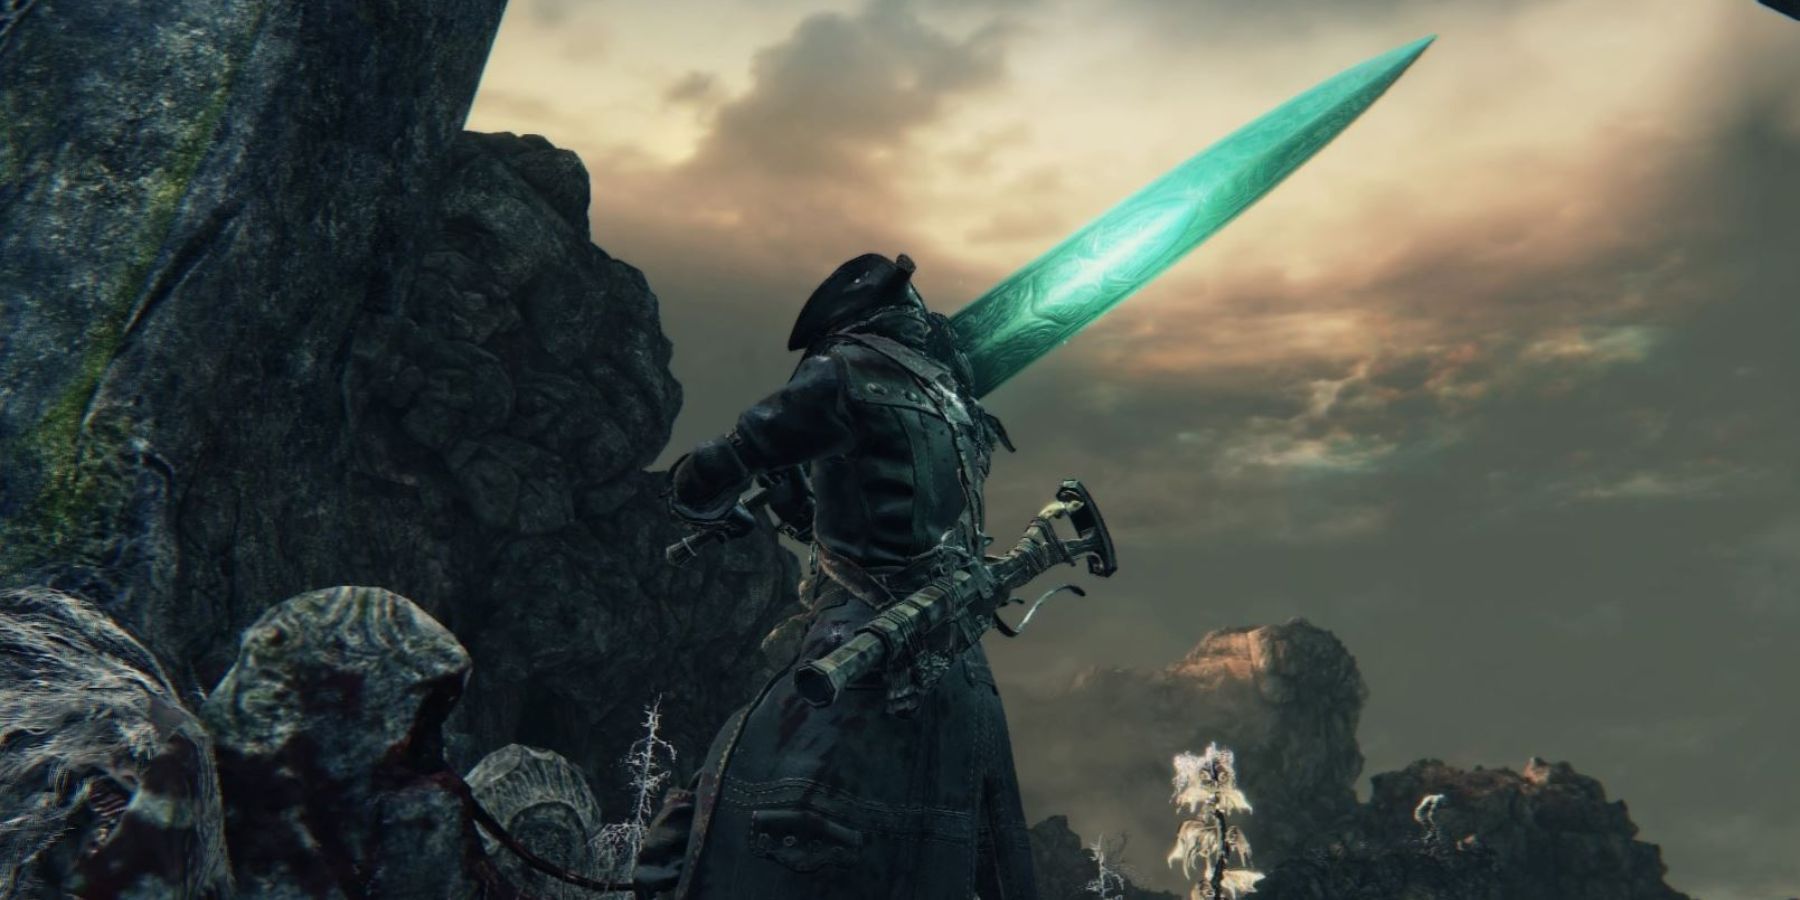 A Hunter wielding the Moonlight Sword